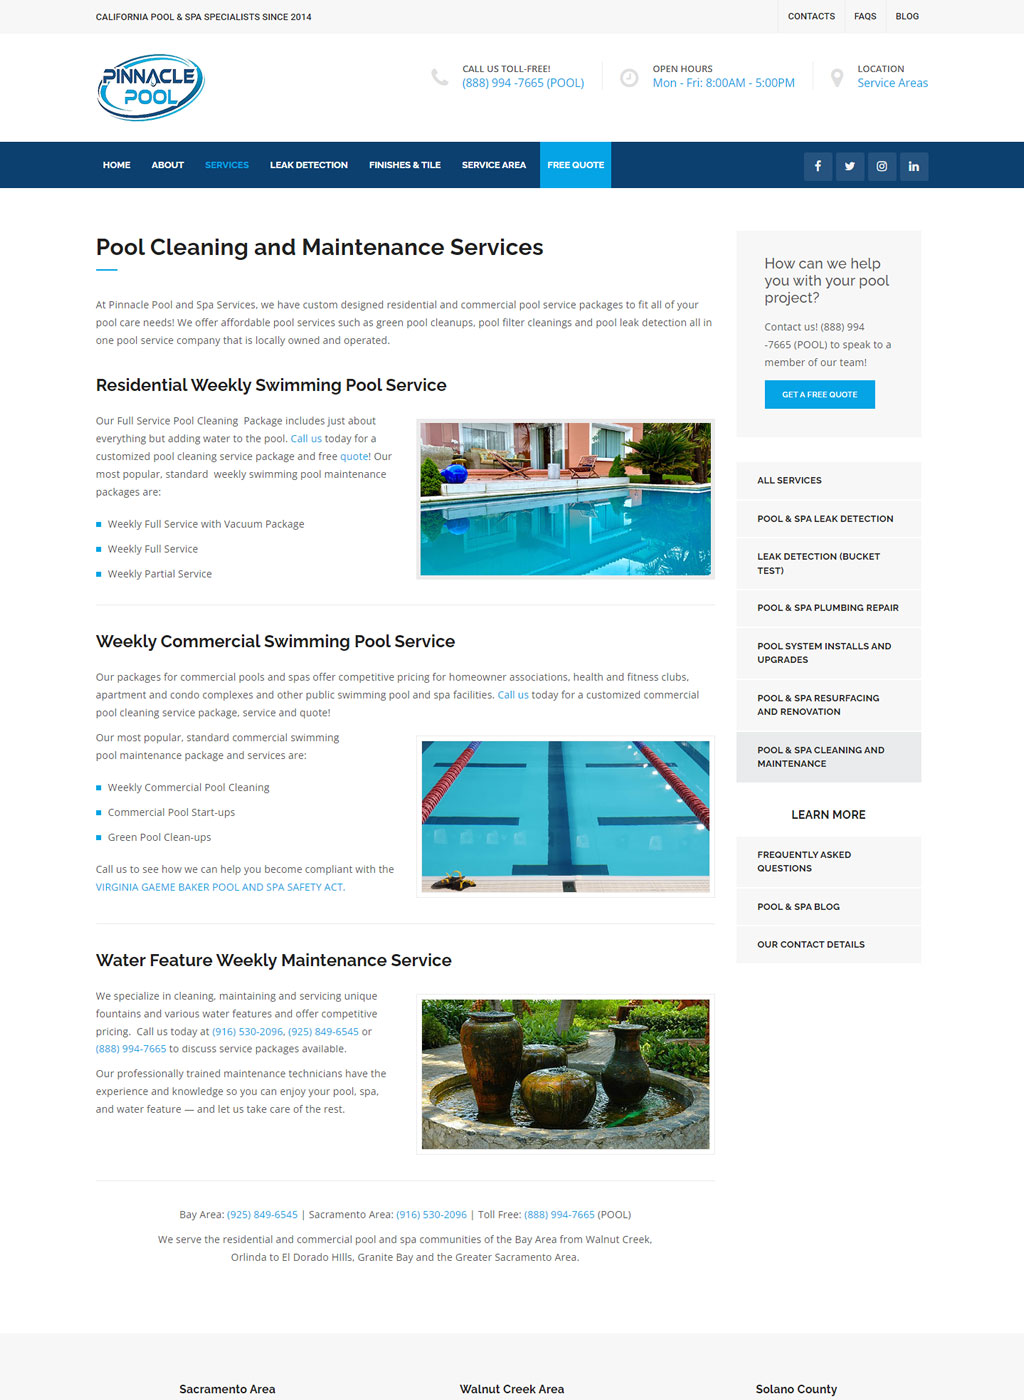 Website developed for Pinnacle Pool & Spa